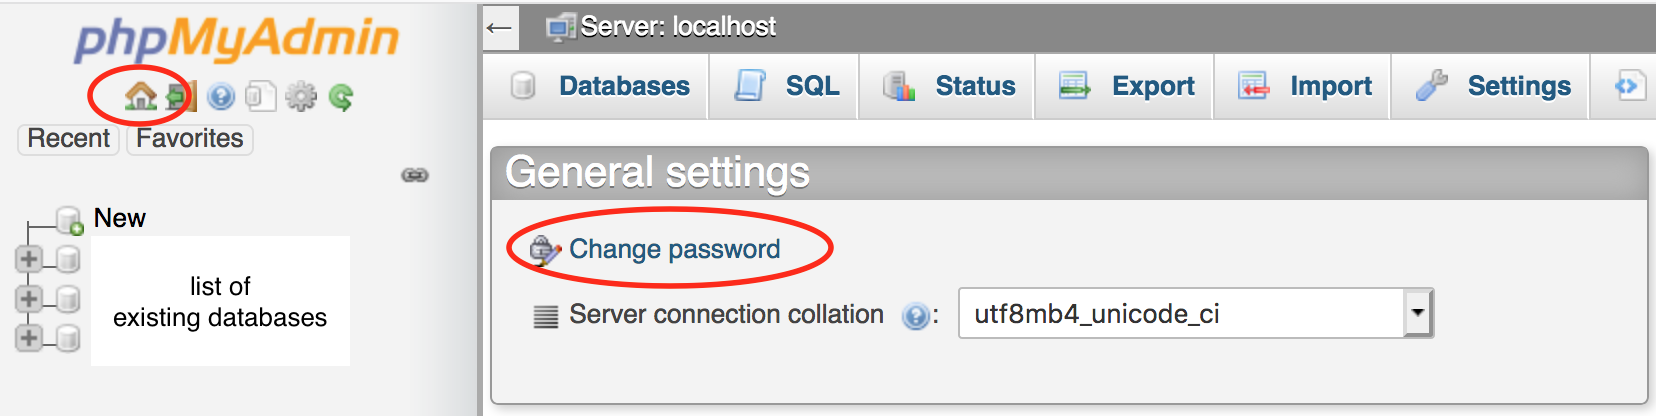 Screen to change password